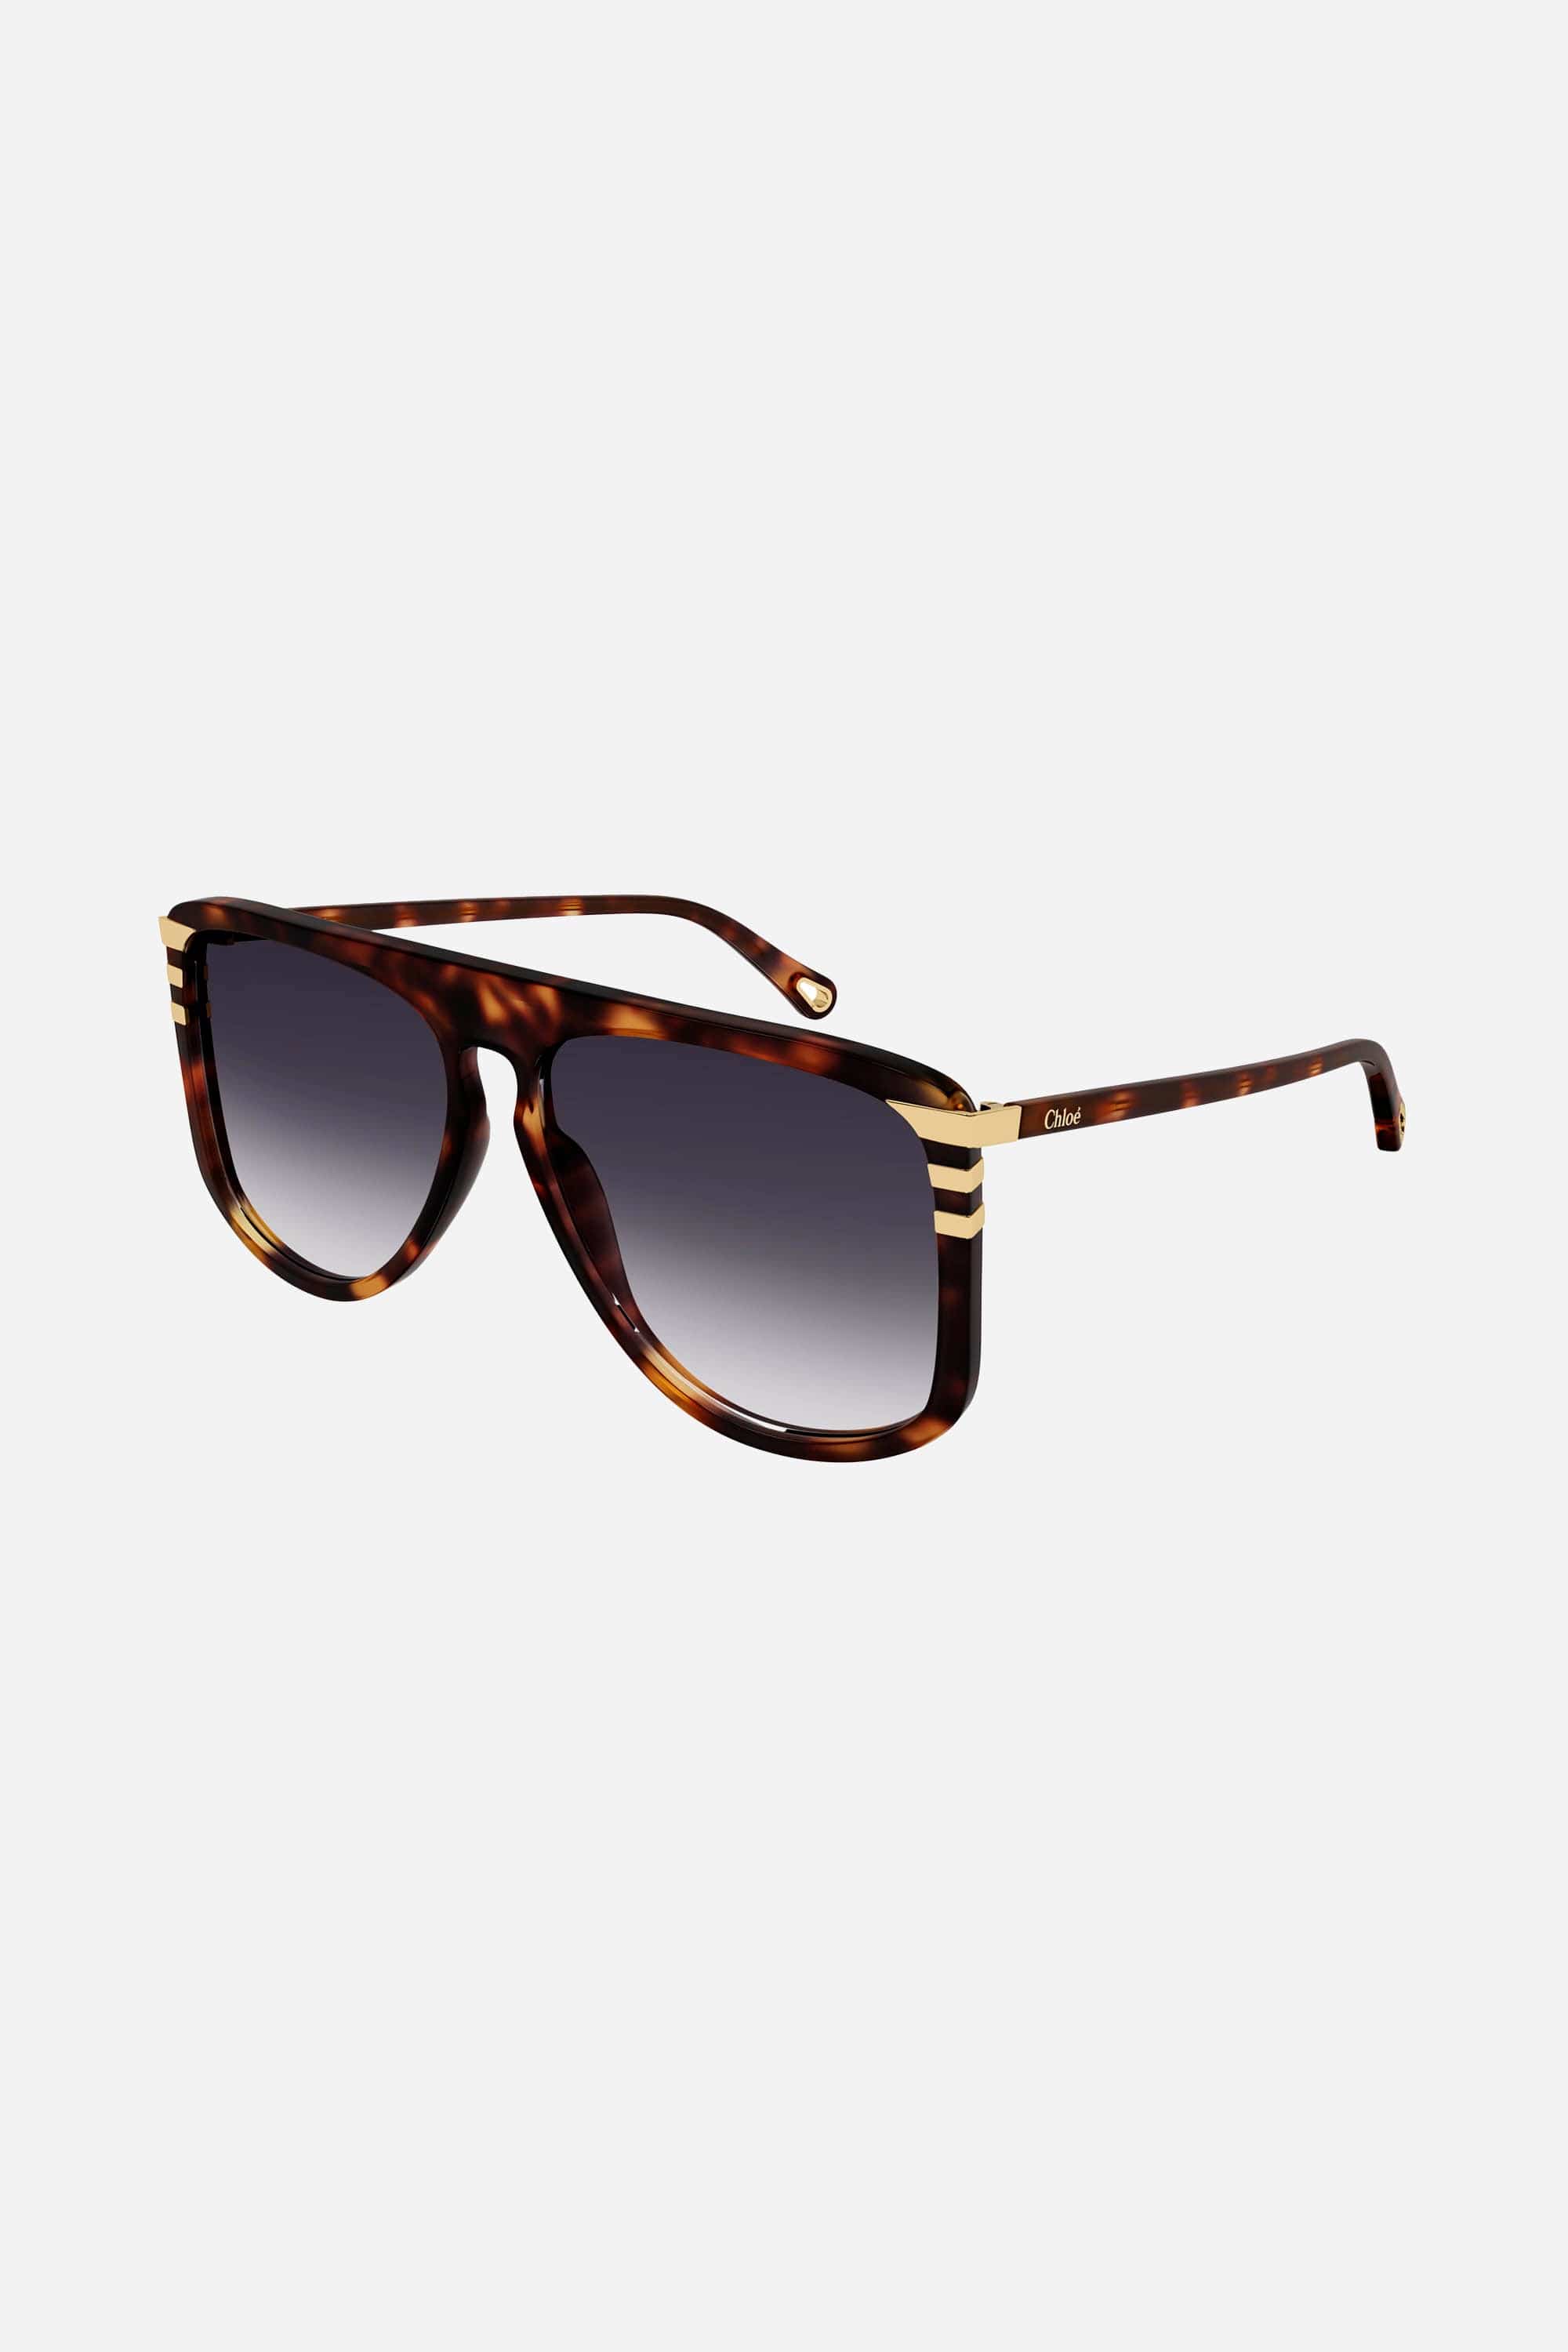 Chloé squared havana shades sunglasses - Eyewear Club